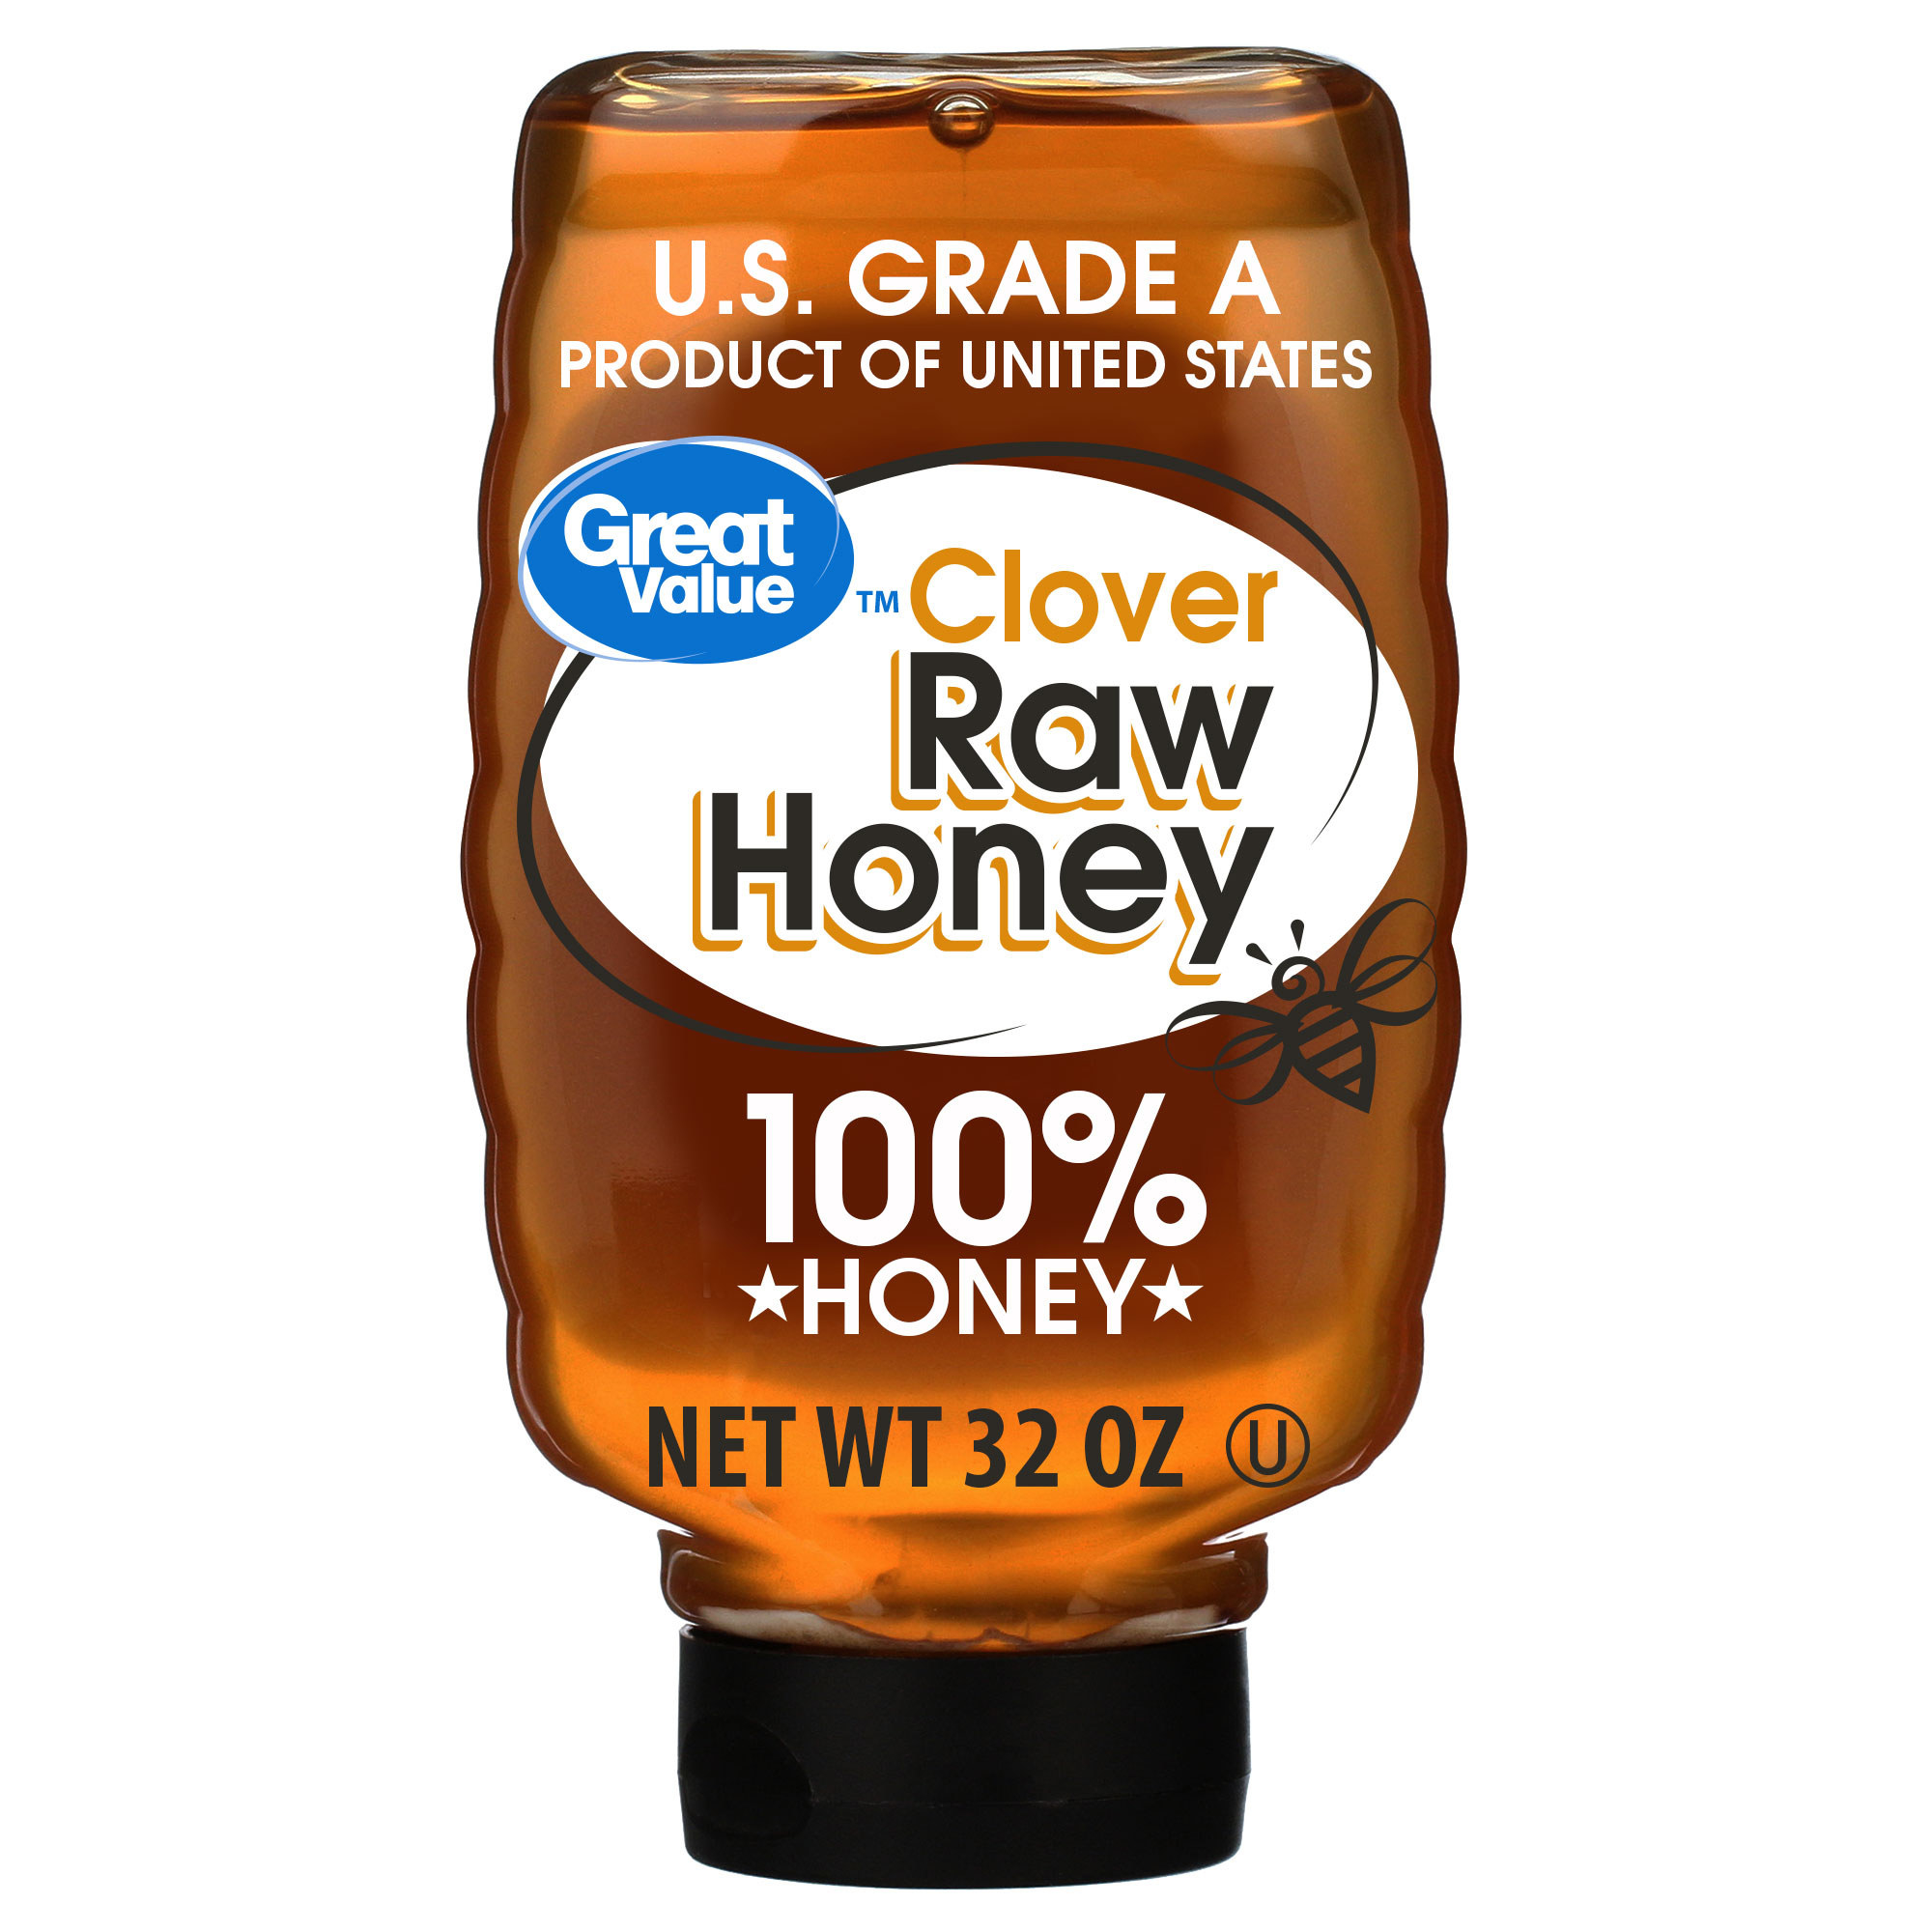 the brown bottle of honey